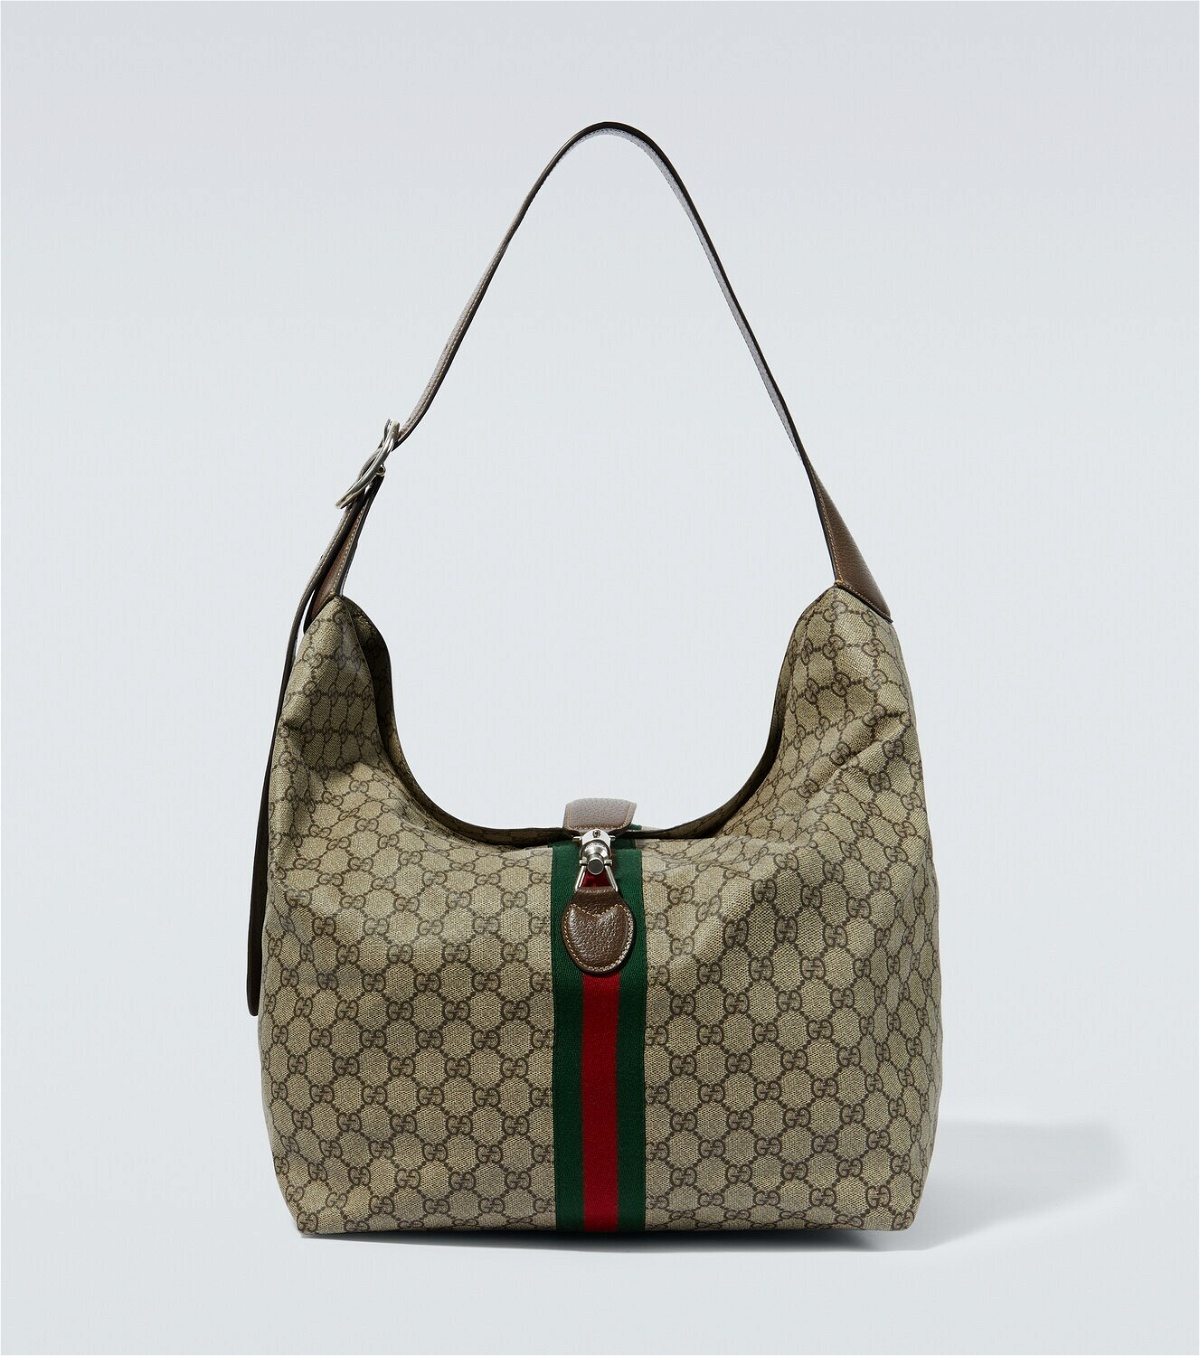 Gucci - Logo-Print Full-Grain Leather Messenger Bag - Black Gucci